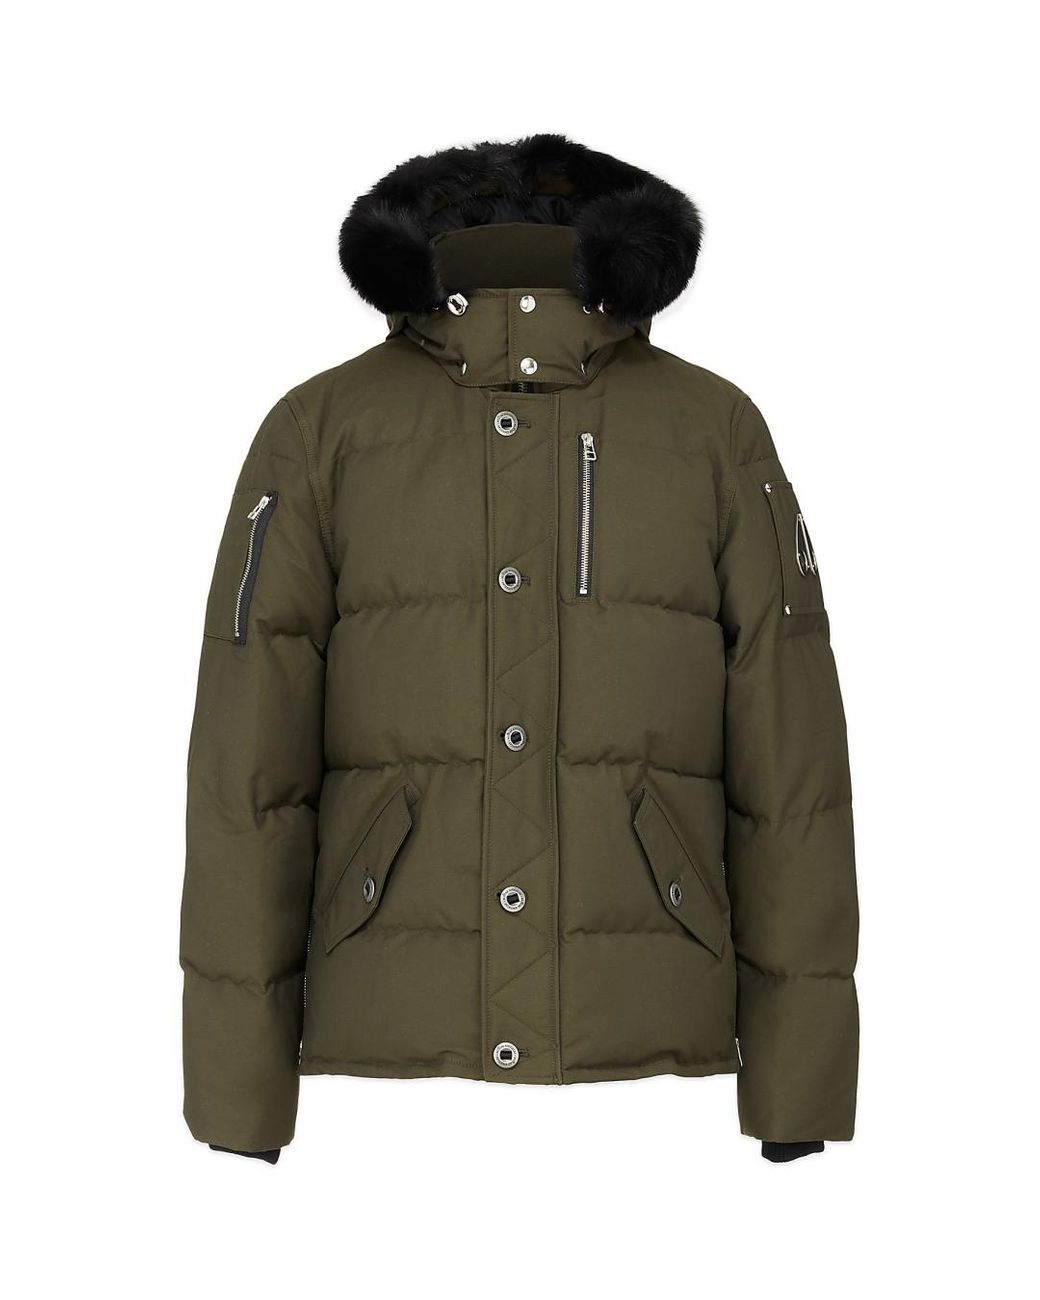 Moose Knuckles Fur 3q Jacket in Army/Black (Green) for Men - Lyst